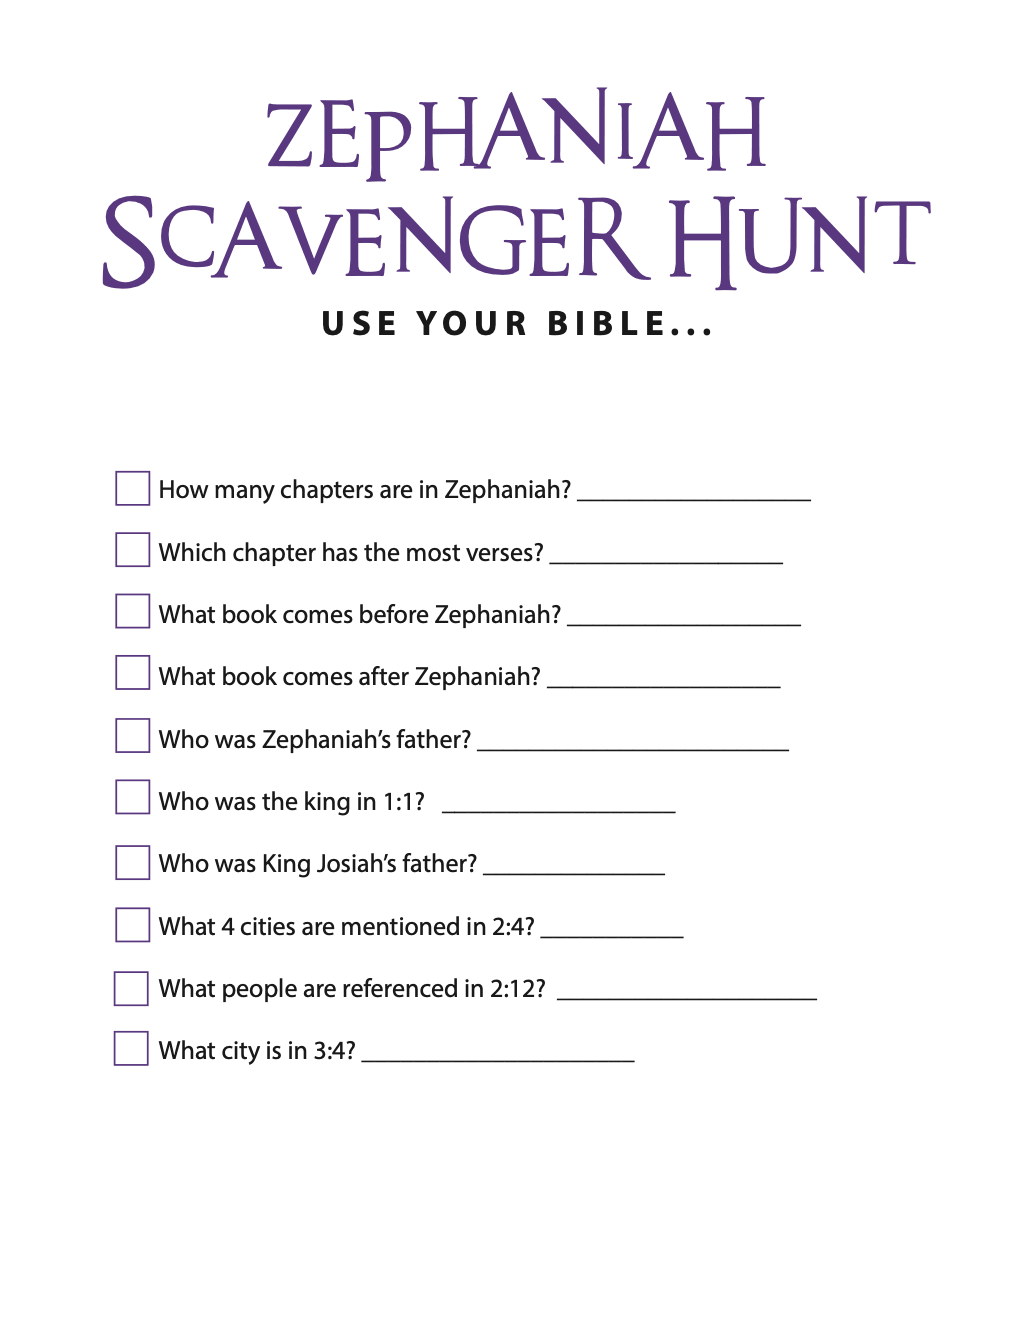 Free zephaniah bible scavenger hunt